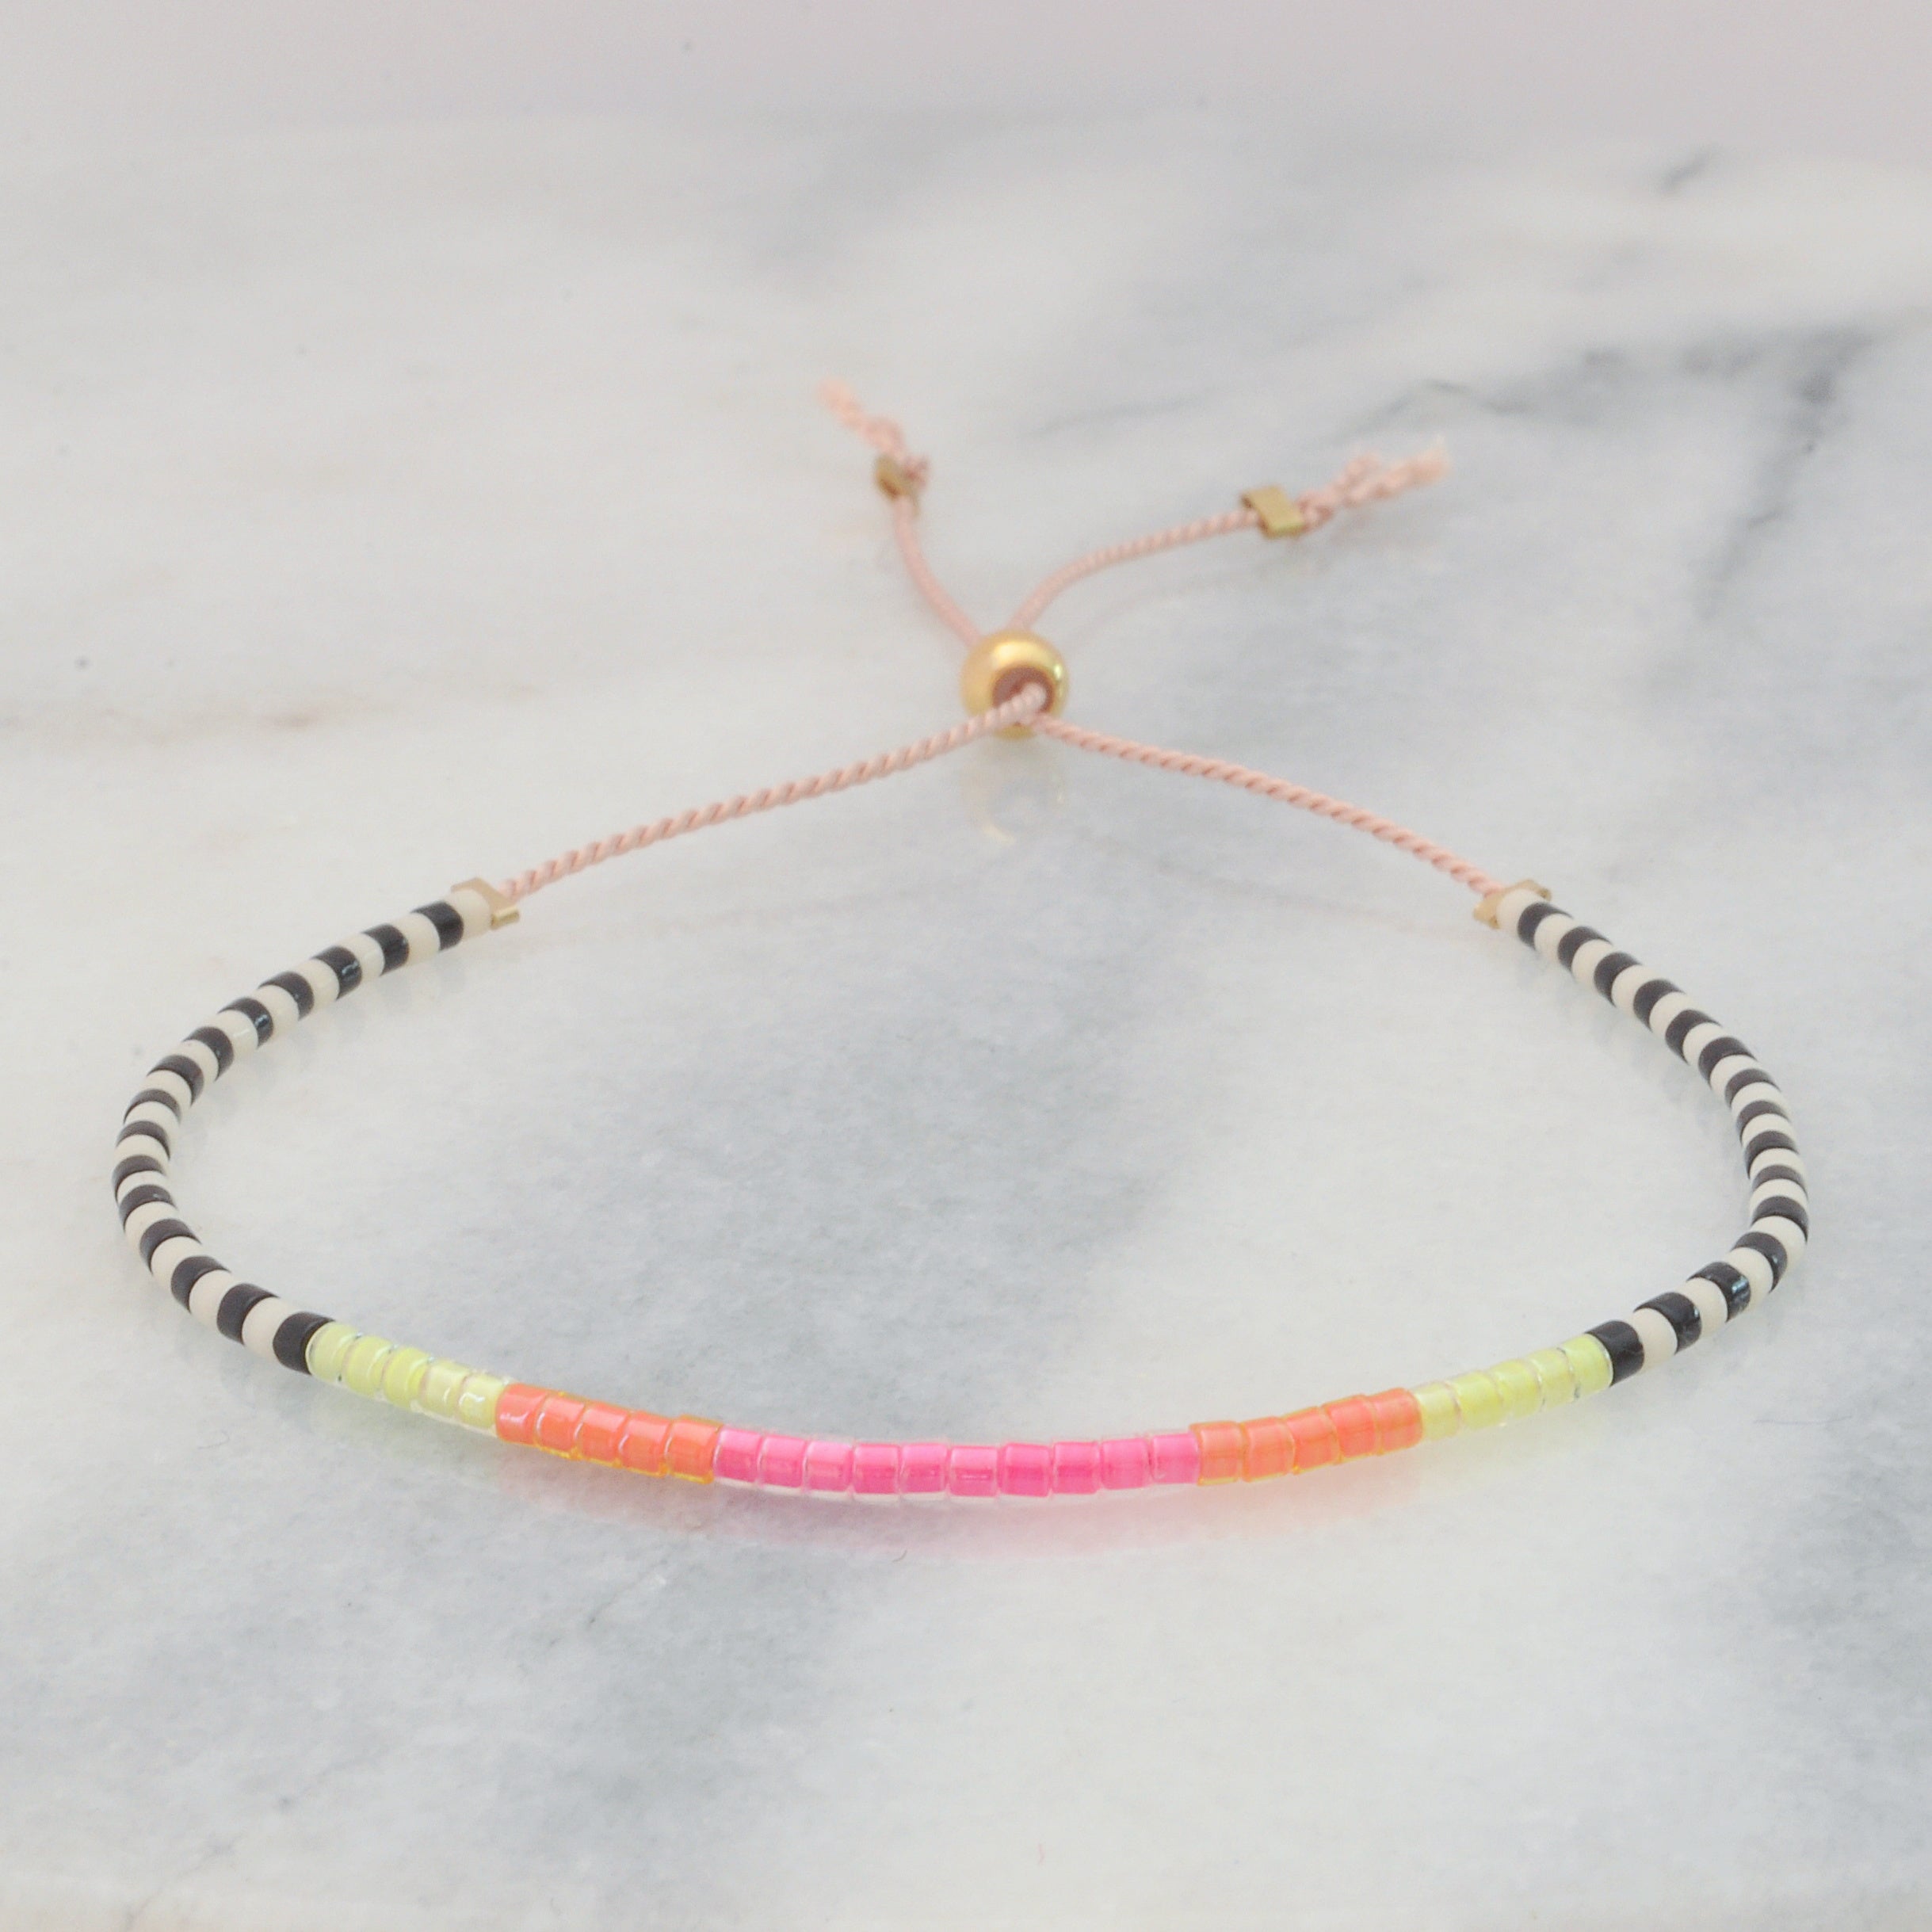 3 Neon orange cord bracelets - Jewelry creation and DIY